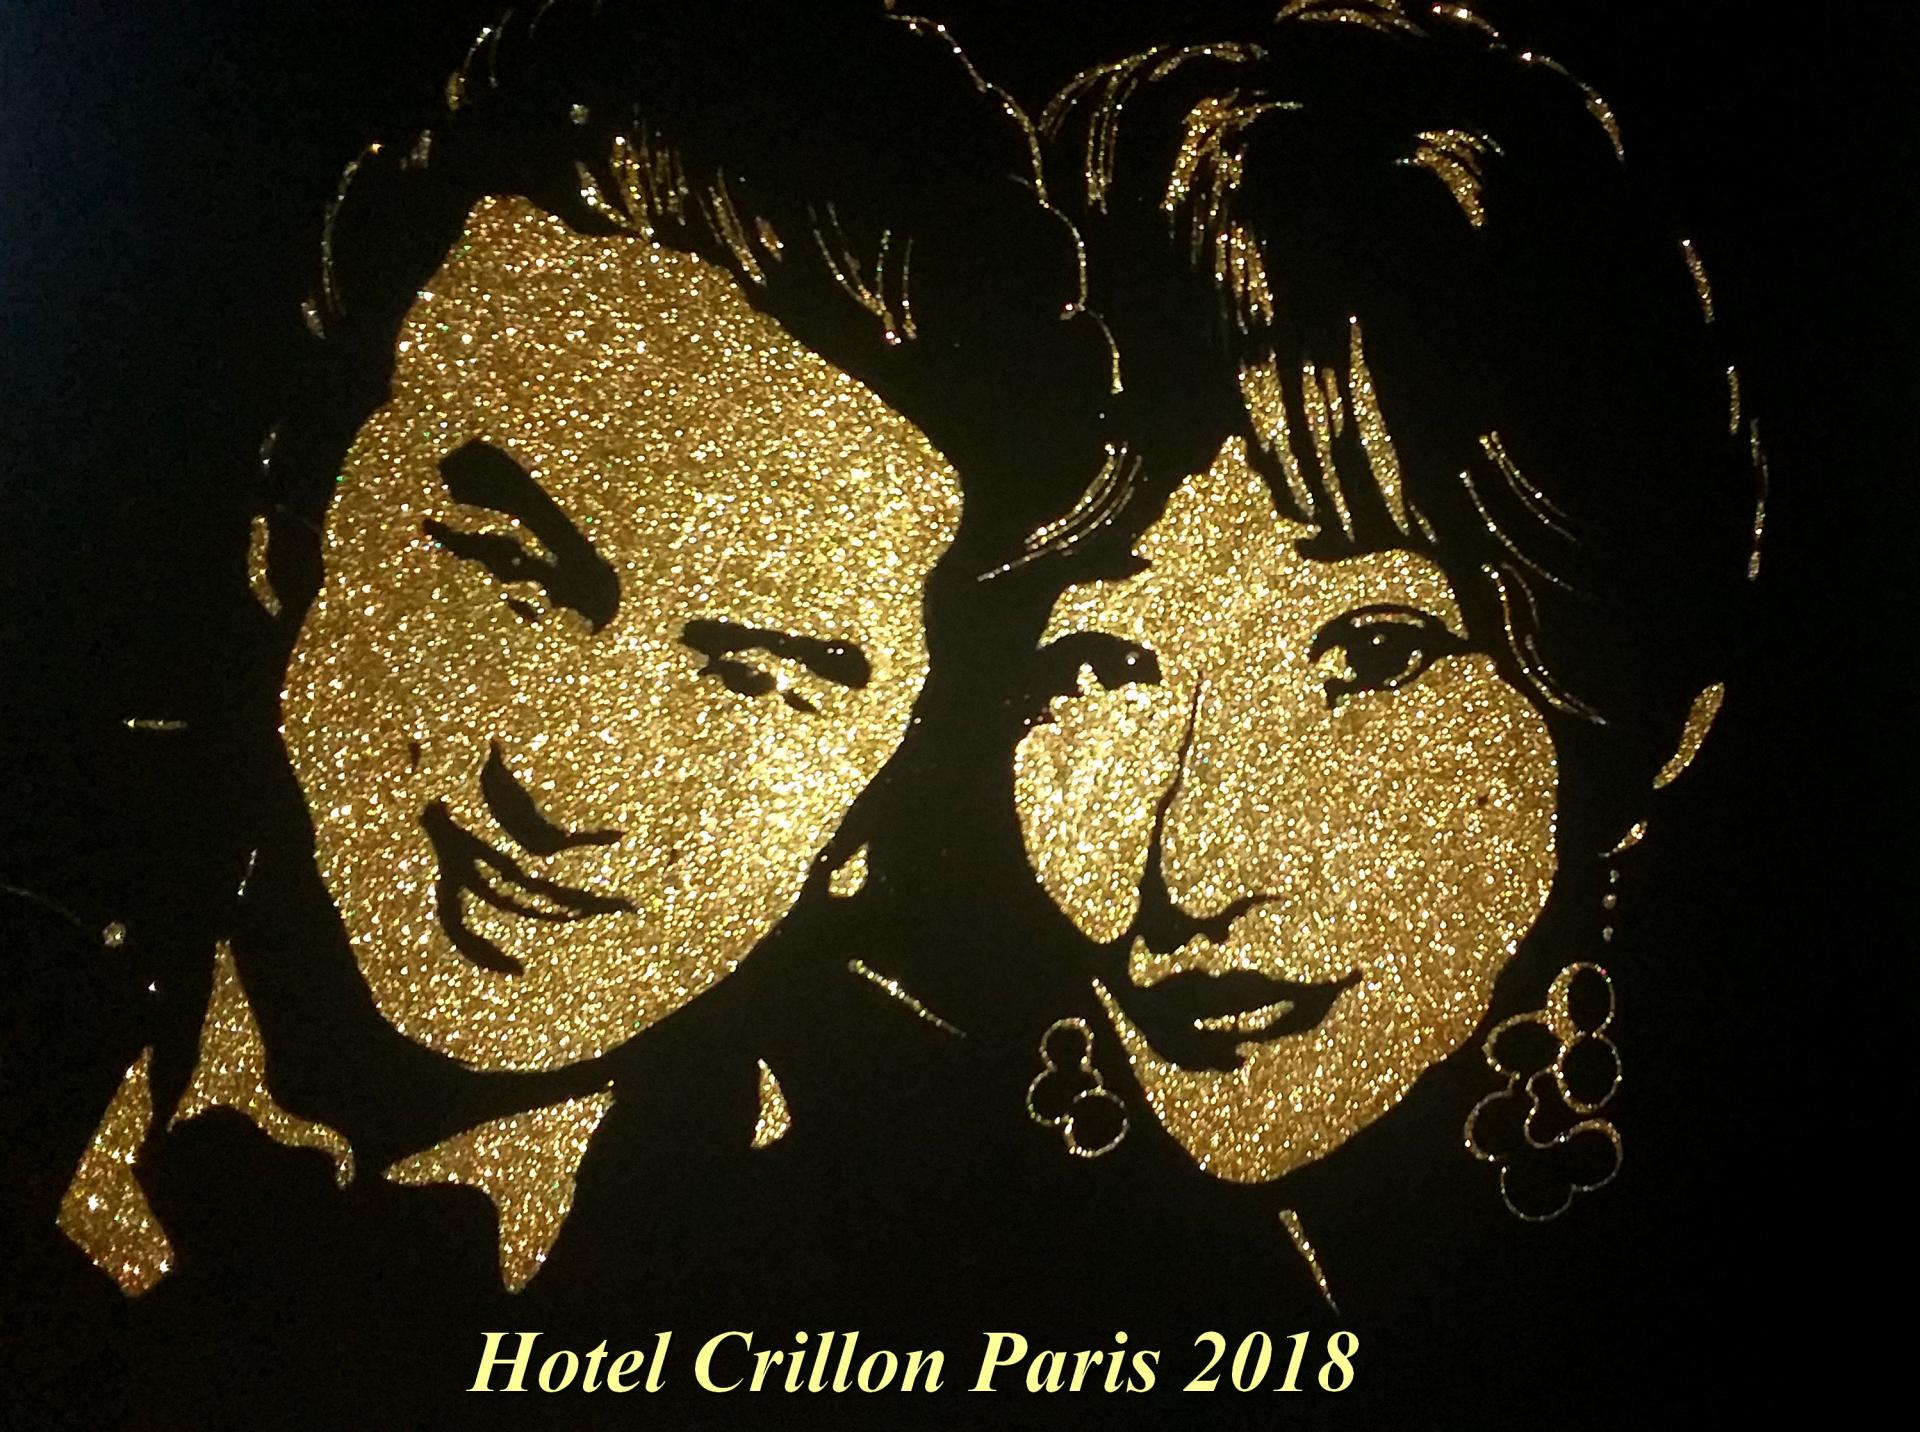 Hotel crillon paris 2018